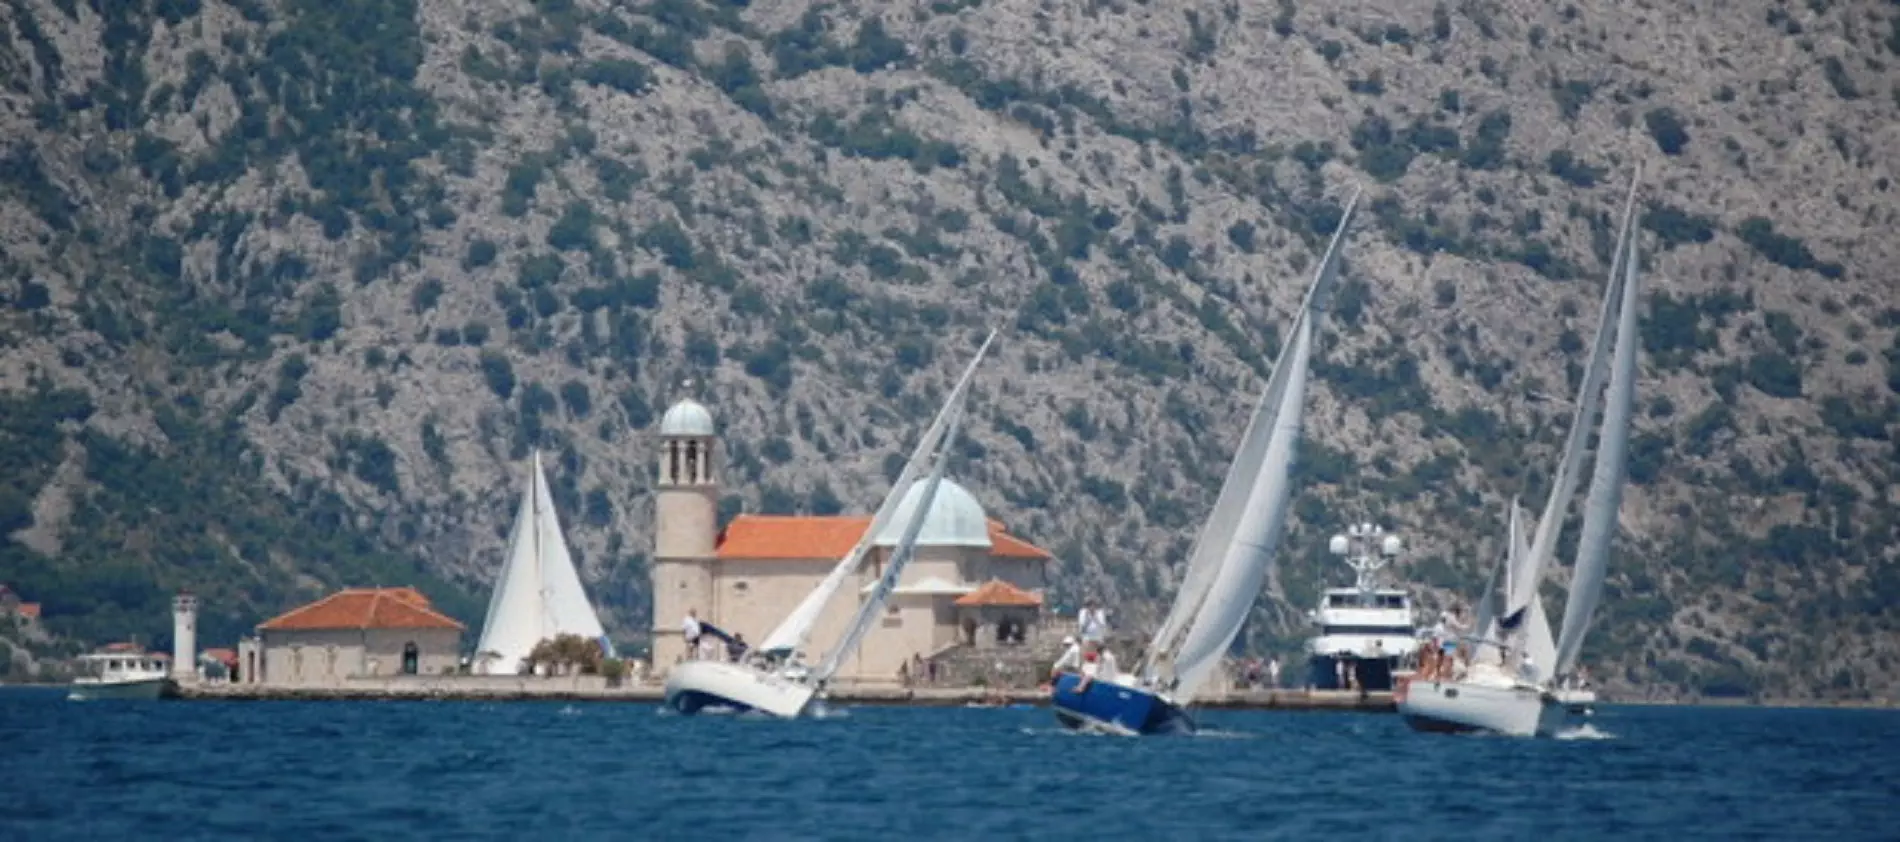 sailing boats racing with an island behind